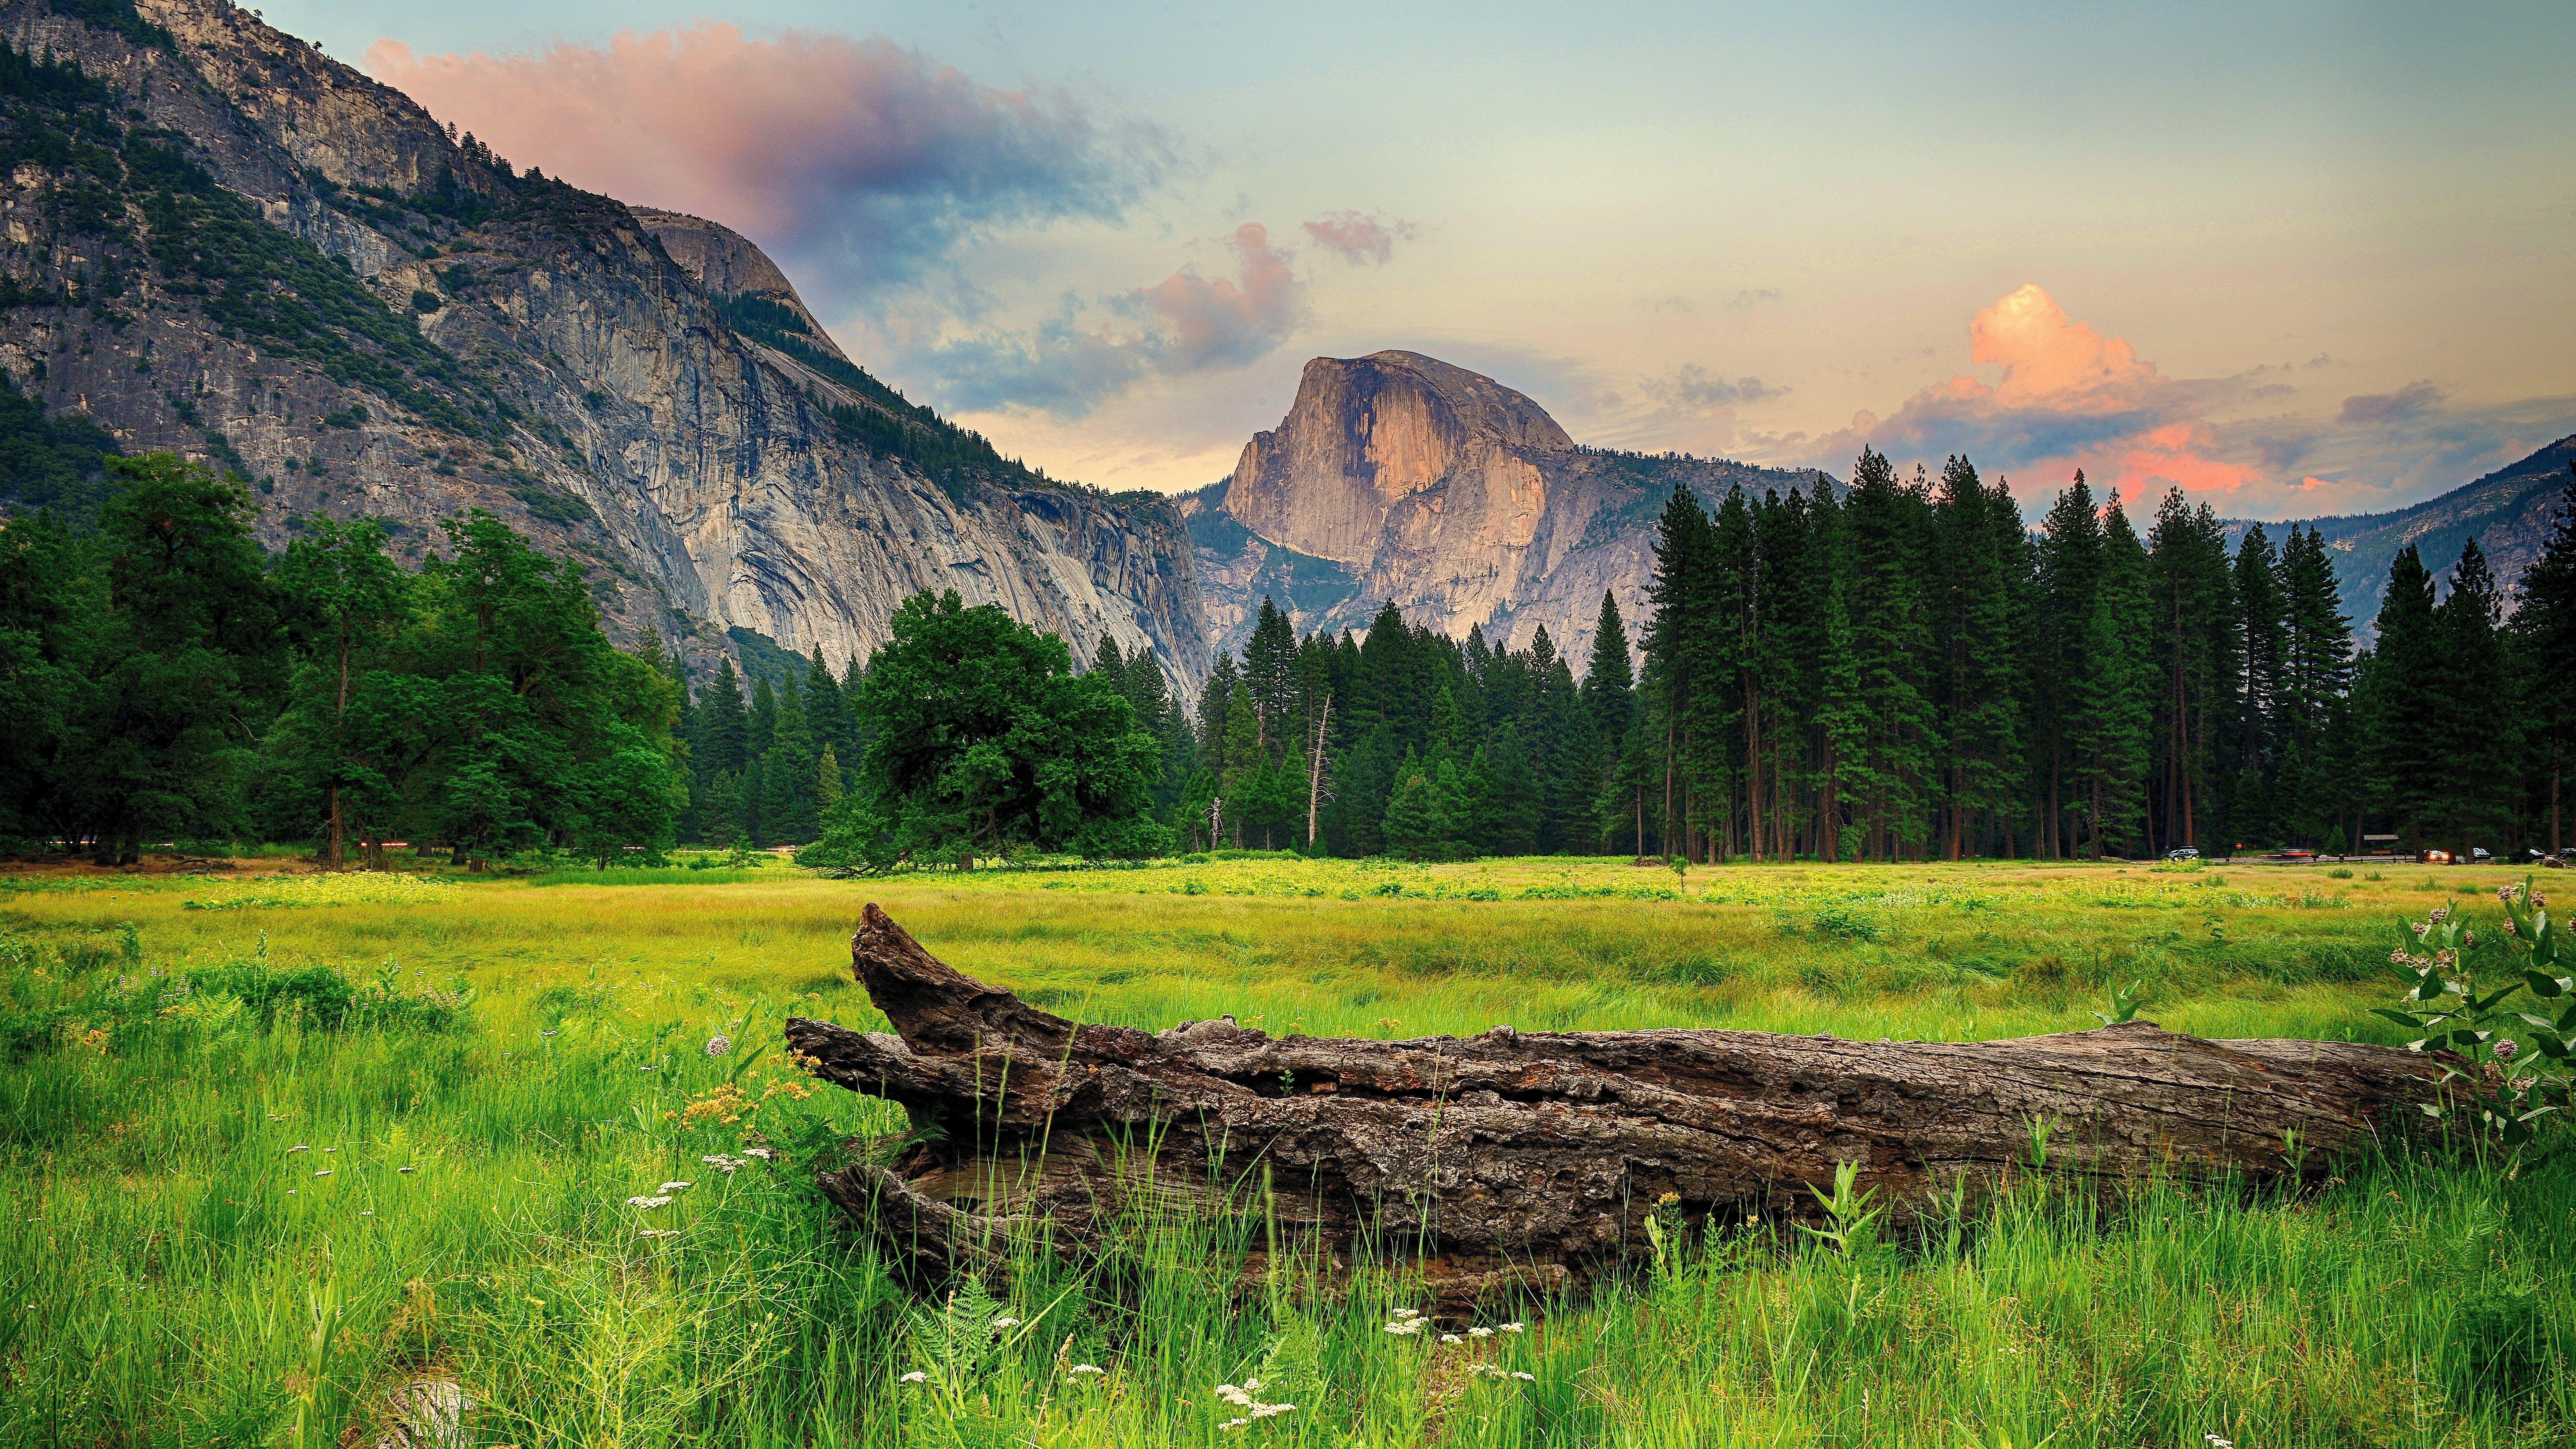 ultra HD wallpaper 8k resolution 7680x4320 nature. Landscape wallpaper, Tree landscape wallpaper, Yosemite wallpaper